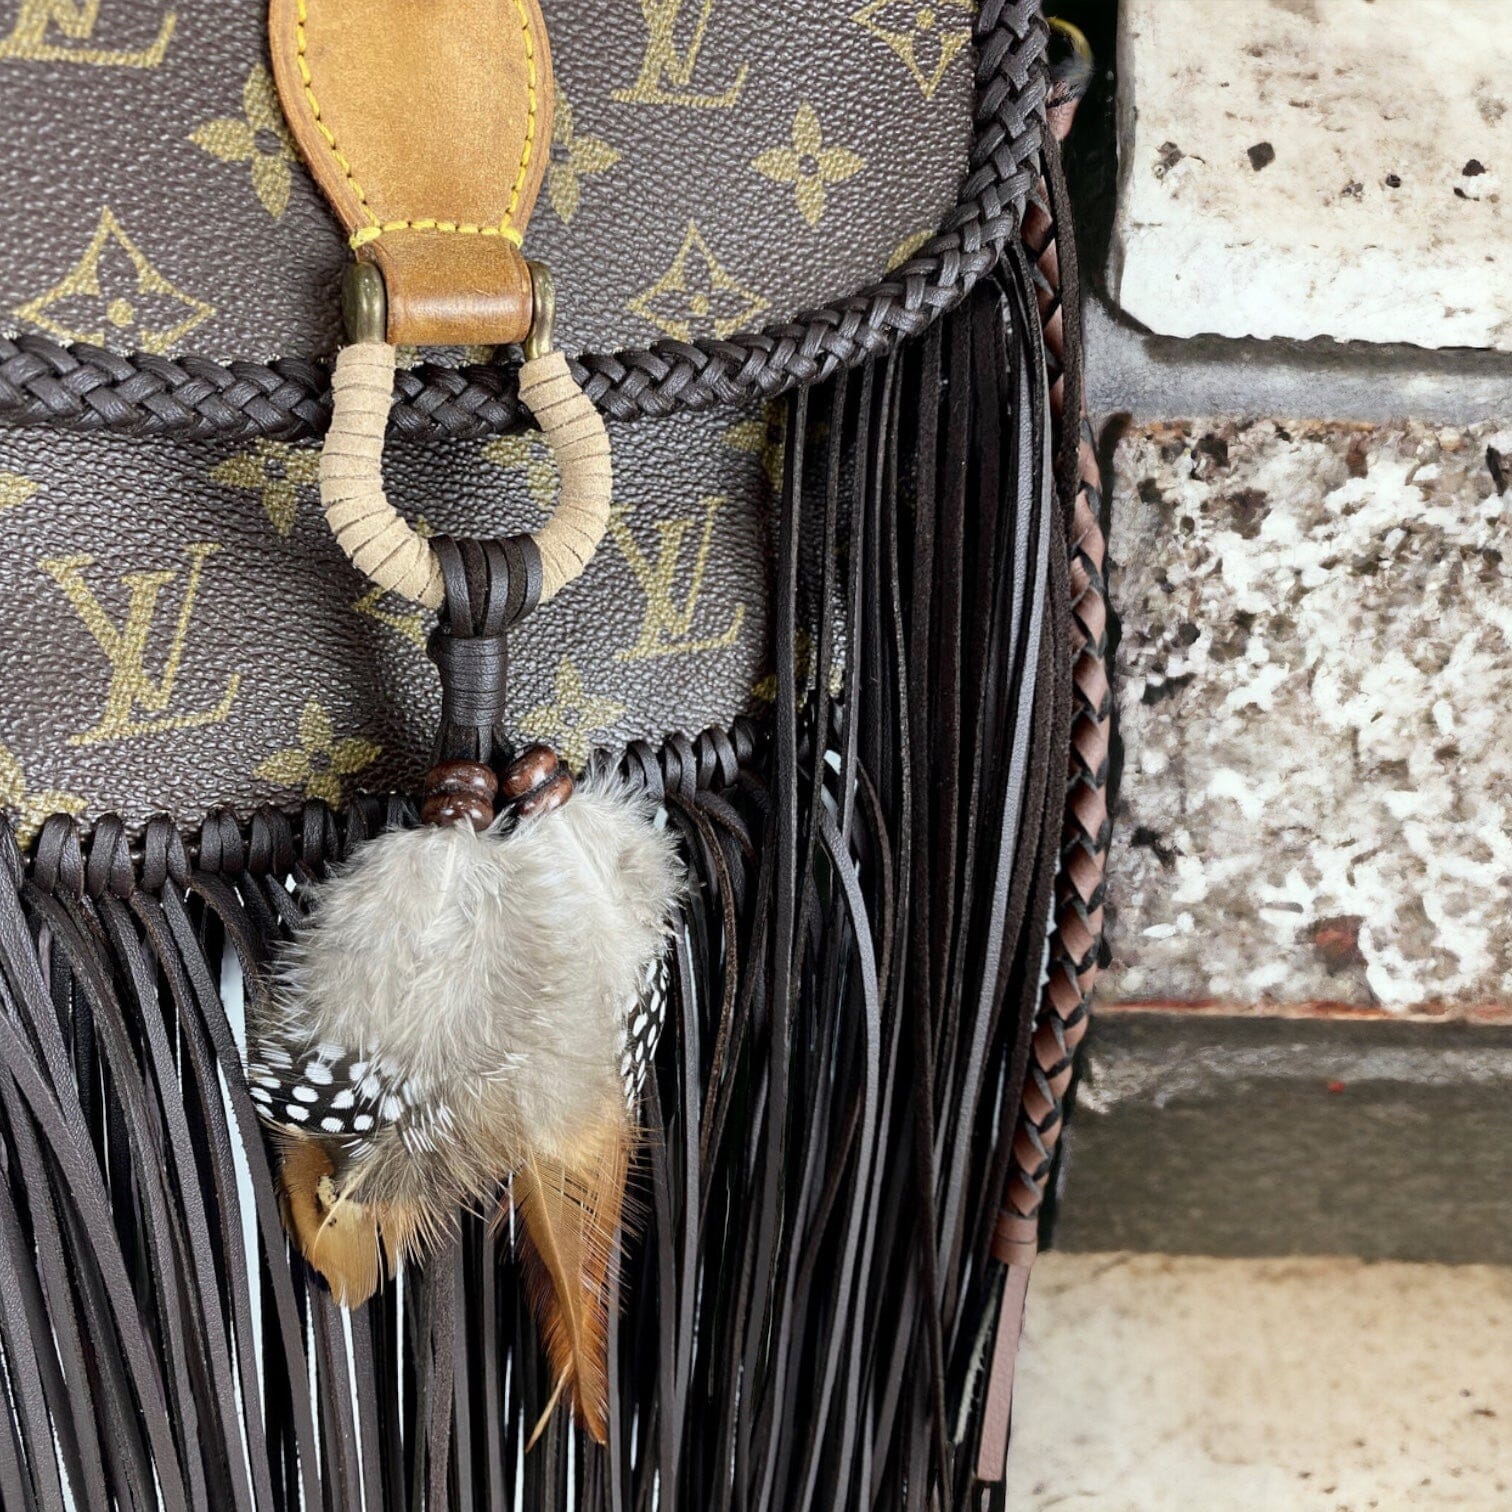 Fringed Louis Vuitton Speedy  Purses and handbags, Purses, Funky purses